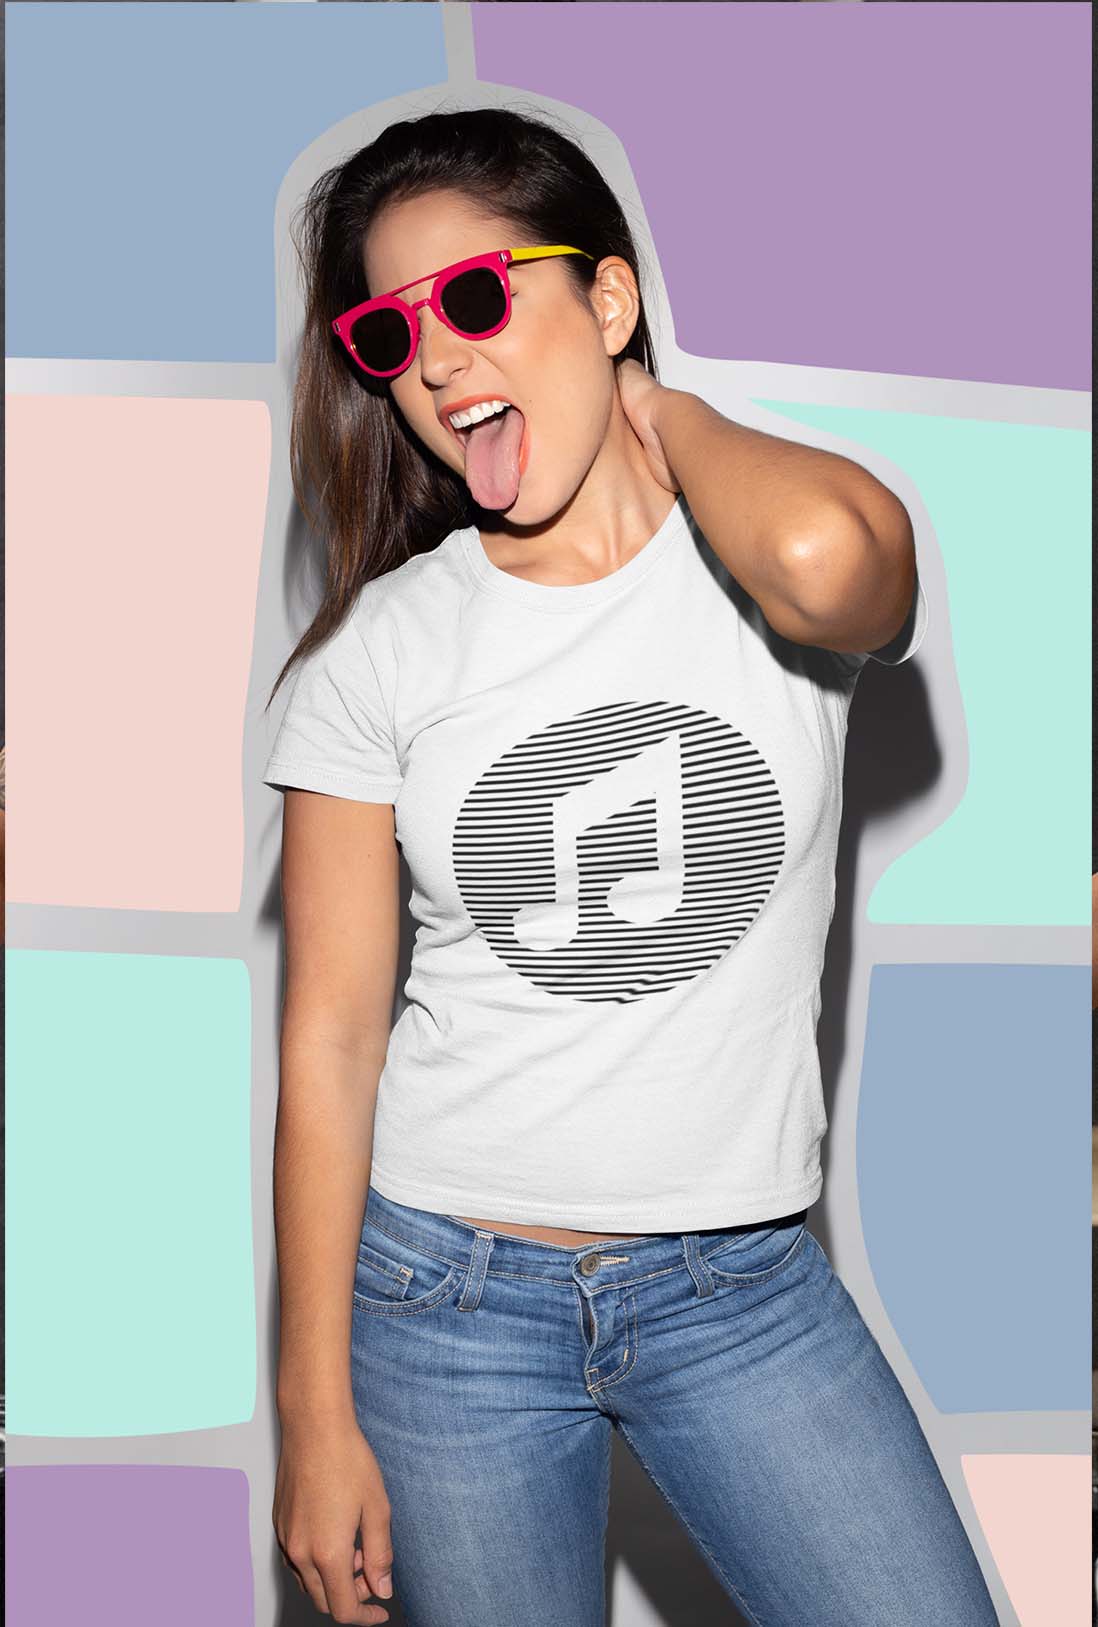 Music Women's Cotton T-Shirt